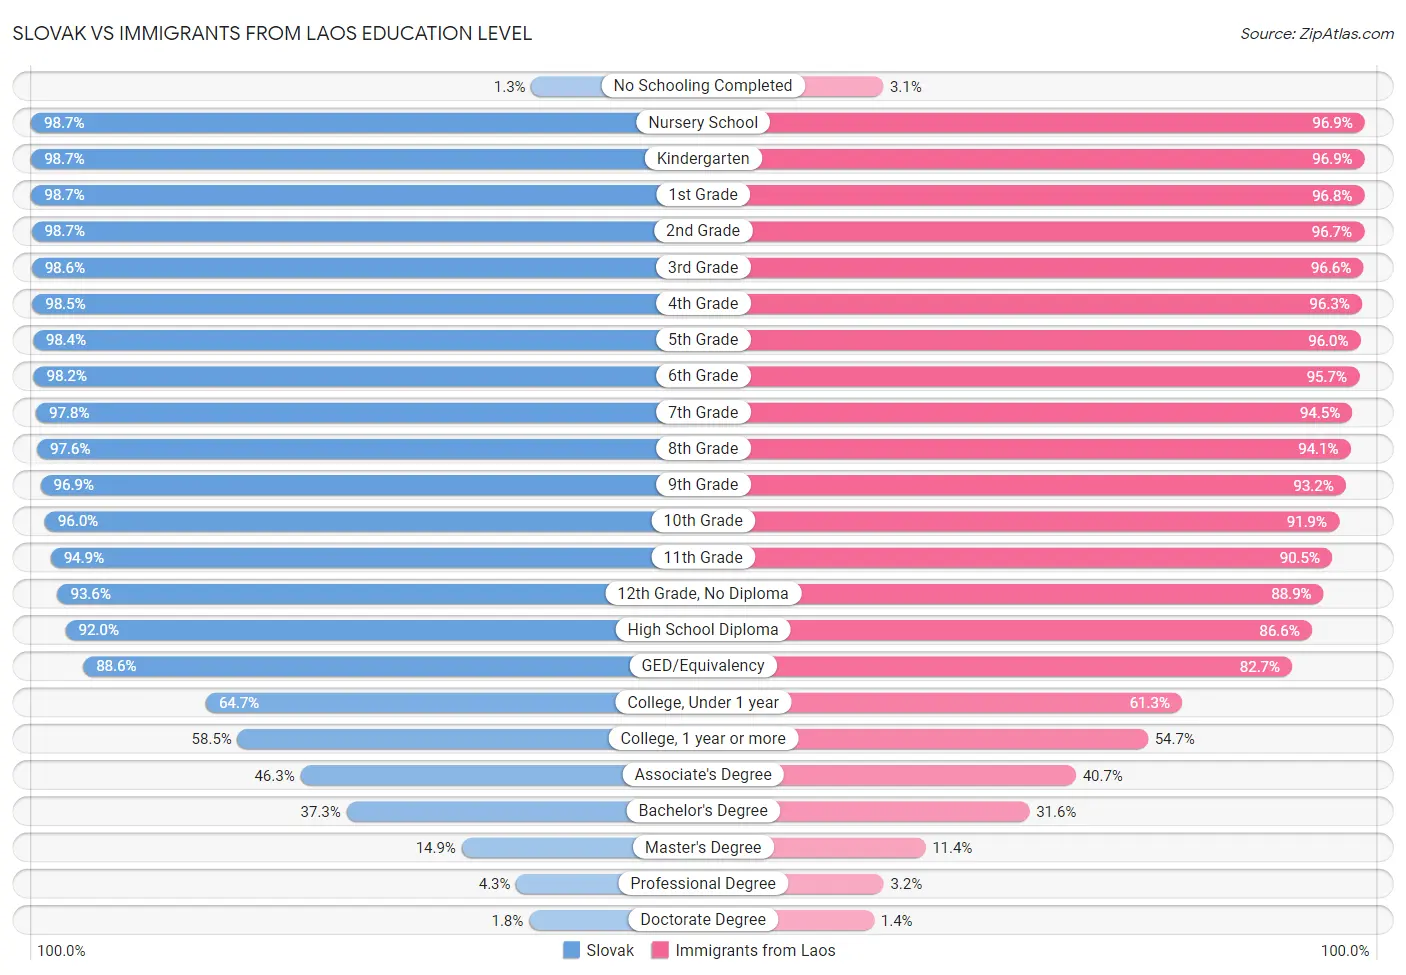 Slovak vs Immigrants from Laos Education Level